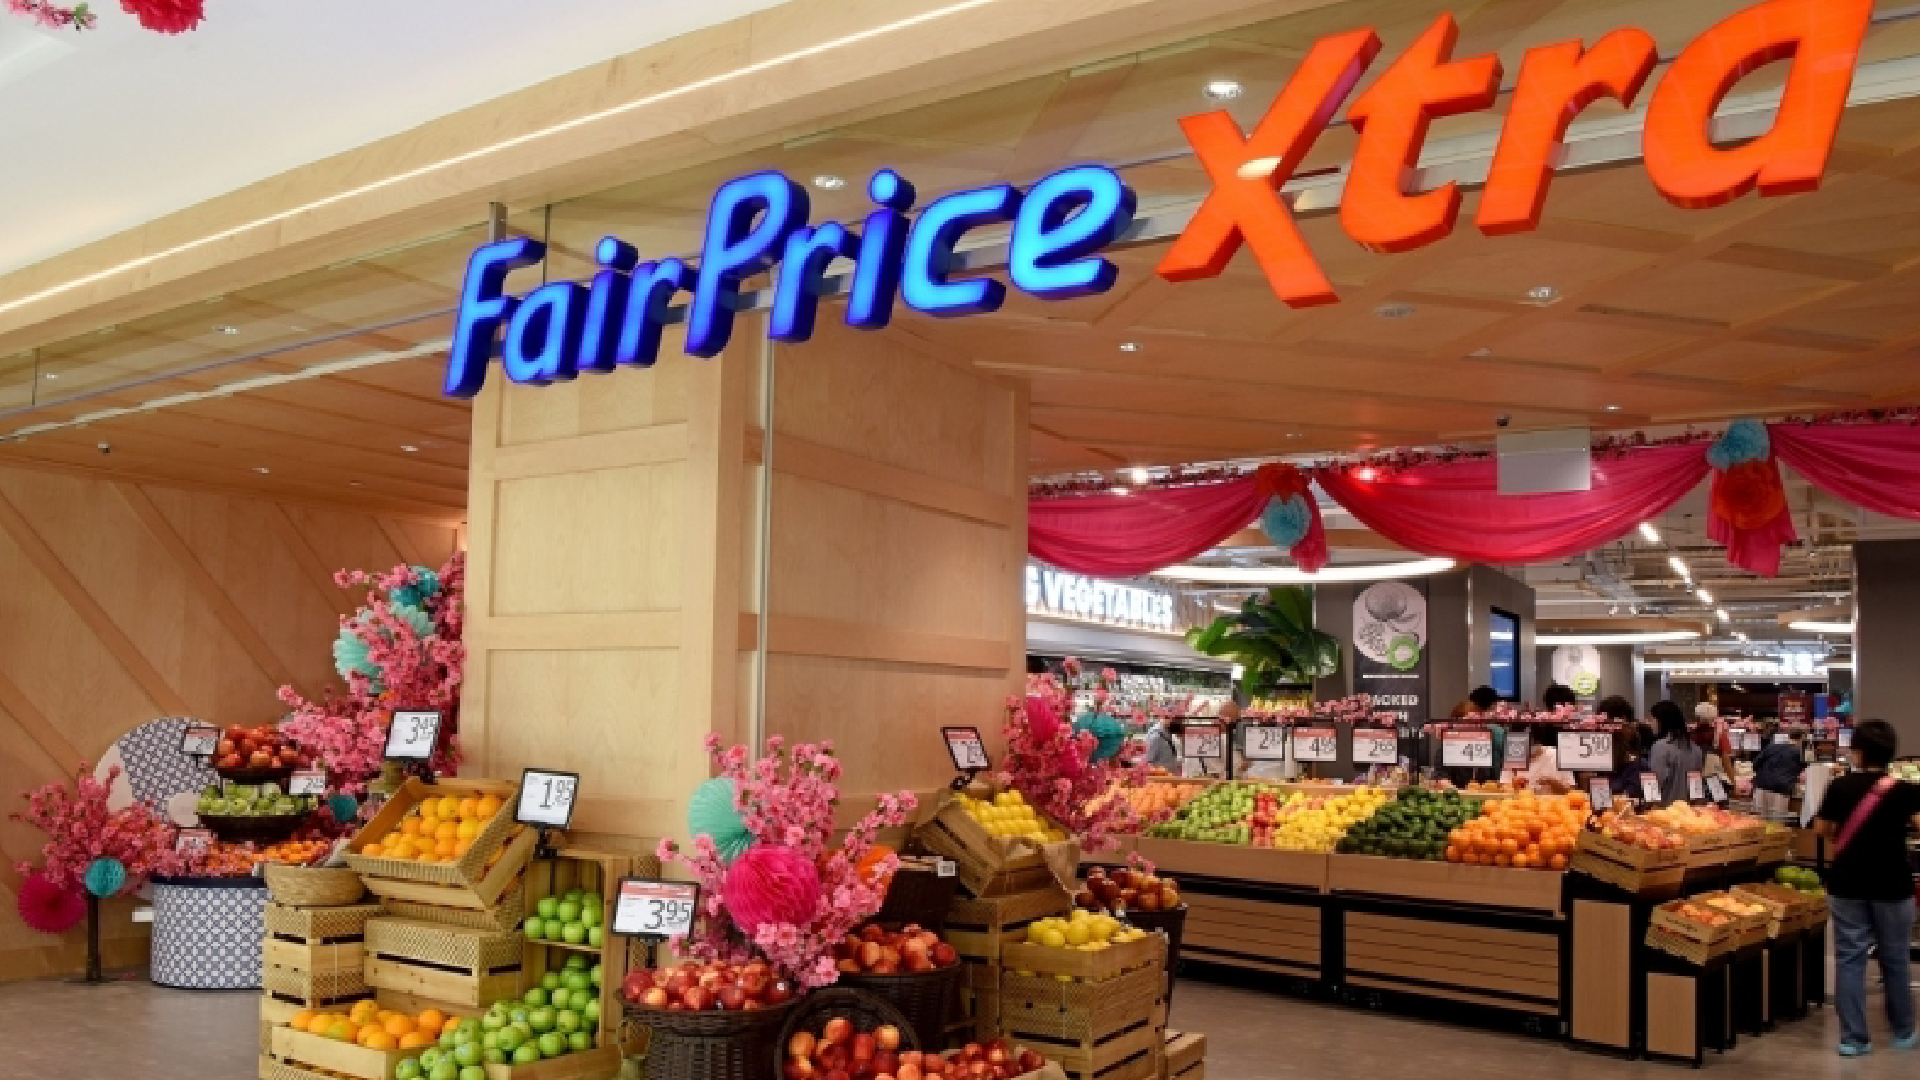 Fairprice Made in Singapore 01